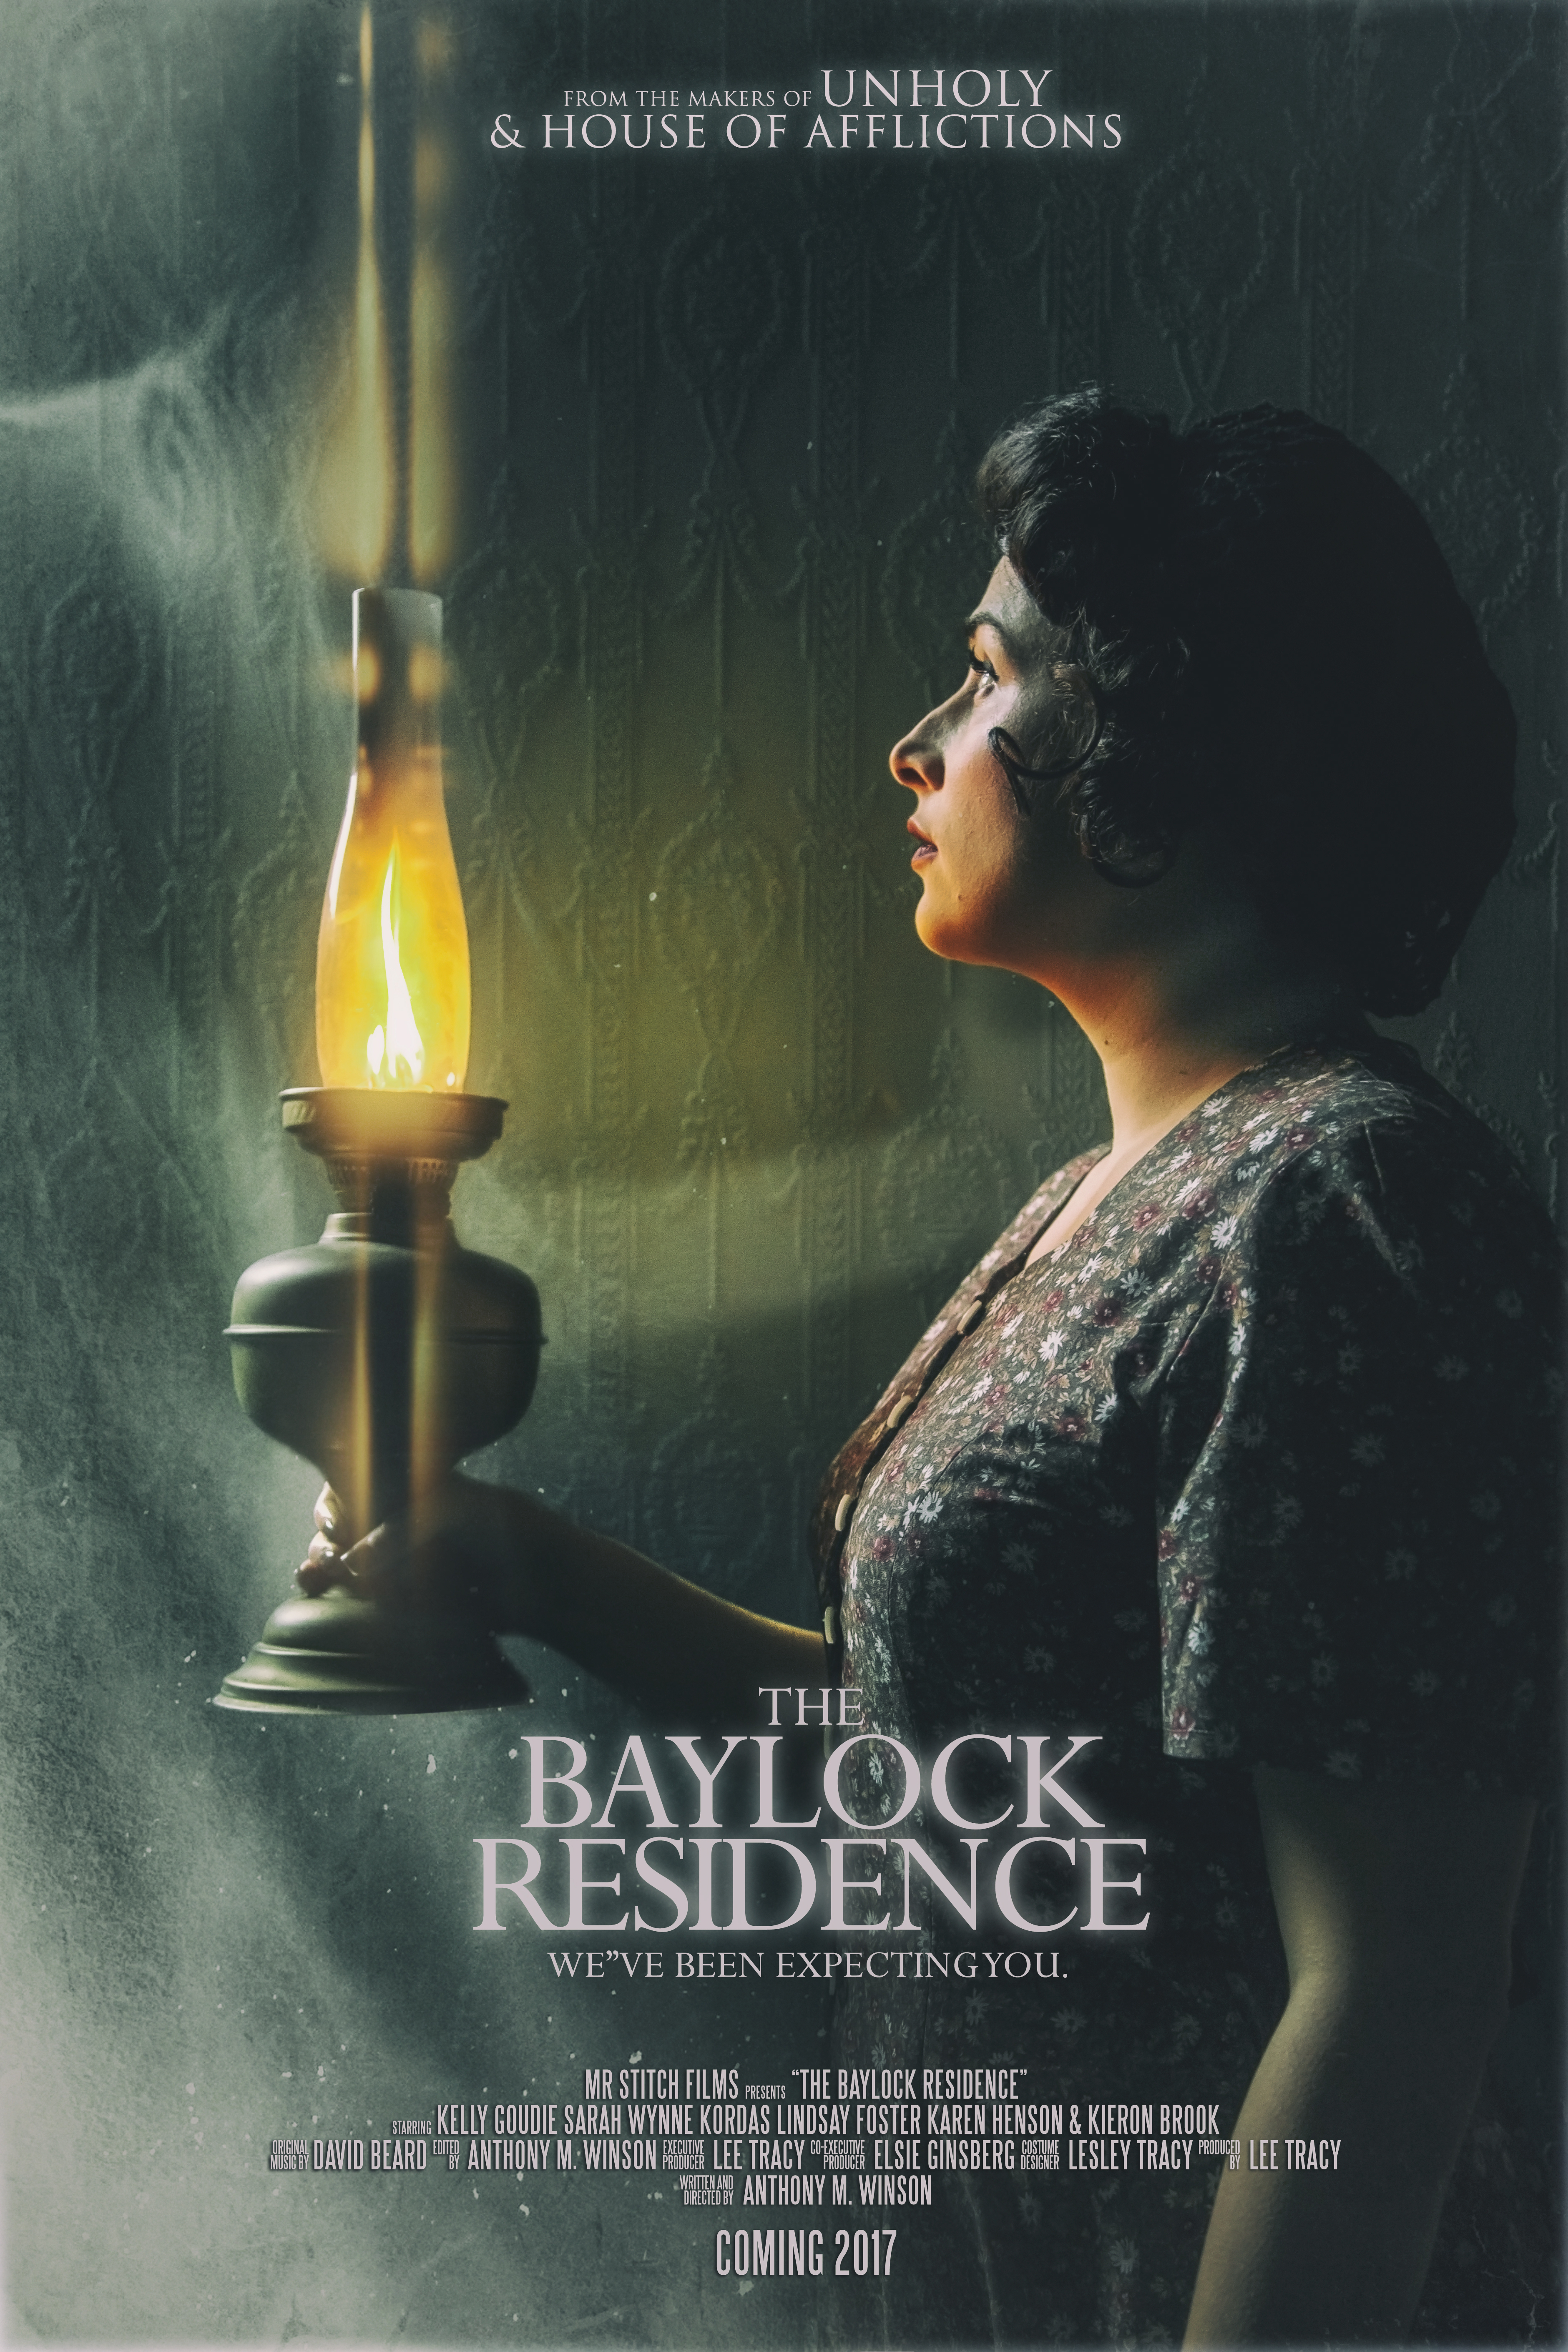 Nonton film The Baylock Residence layarkaca21 indoxx1 ganool online streaming terbaru